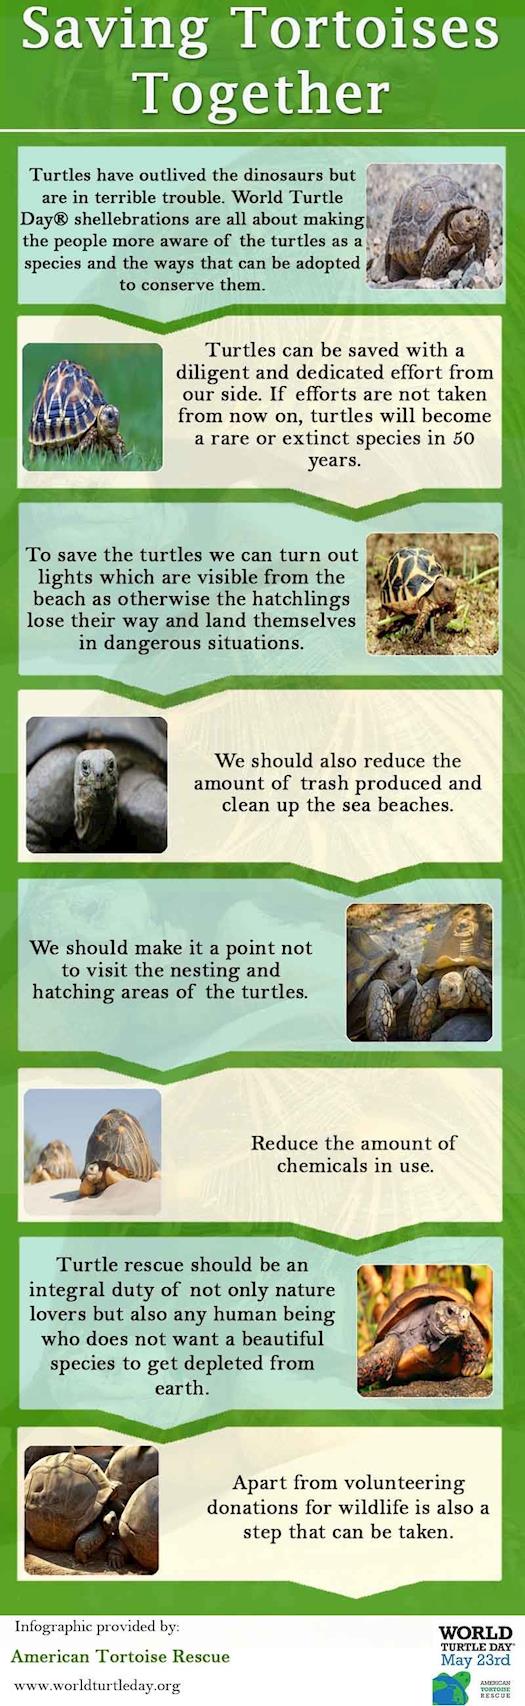 Saving Tortoises Together